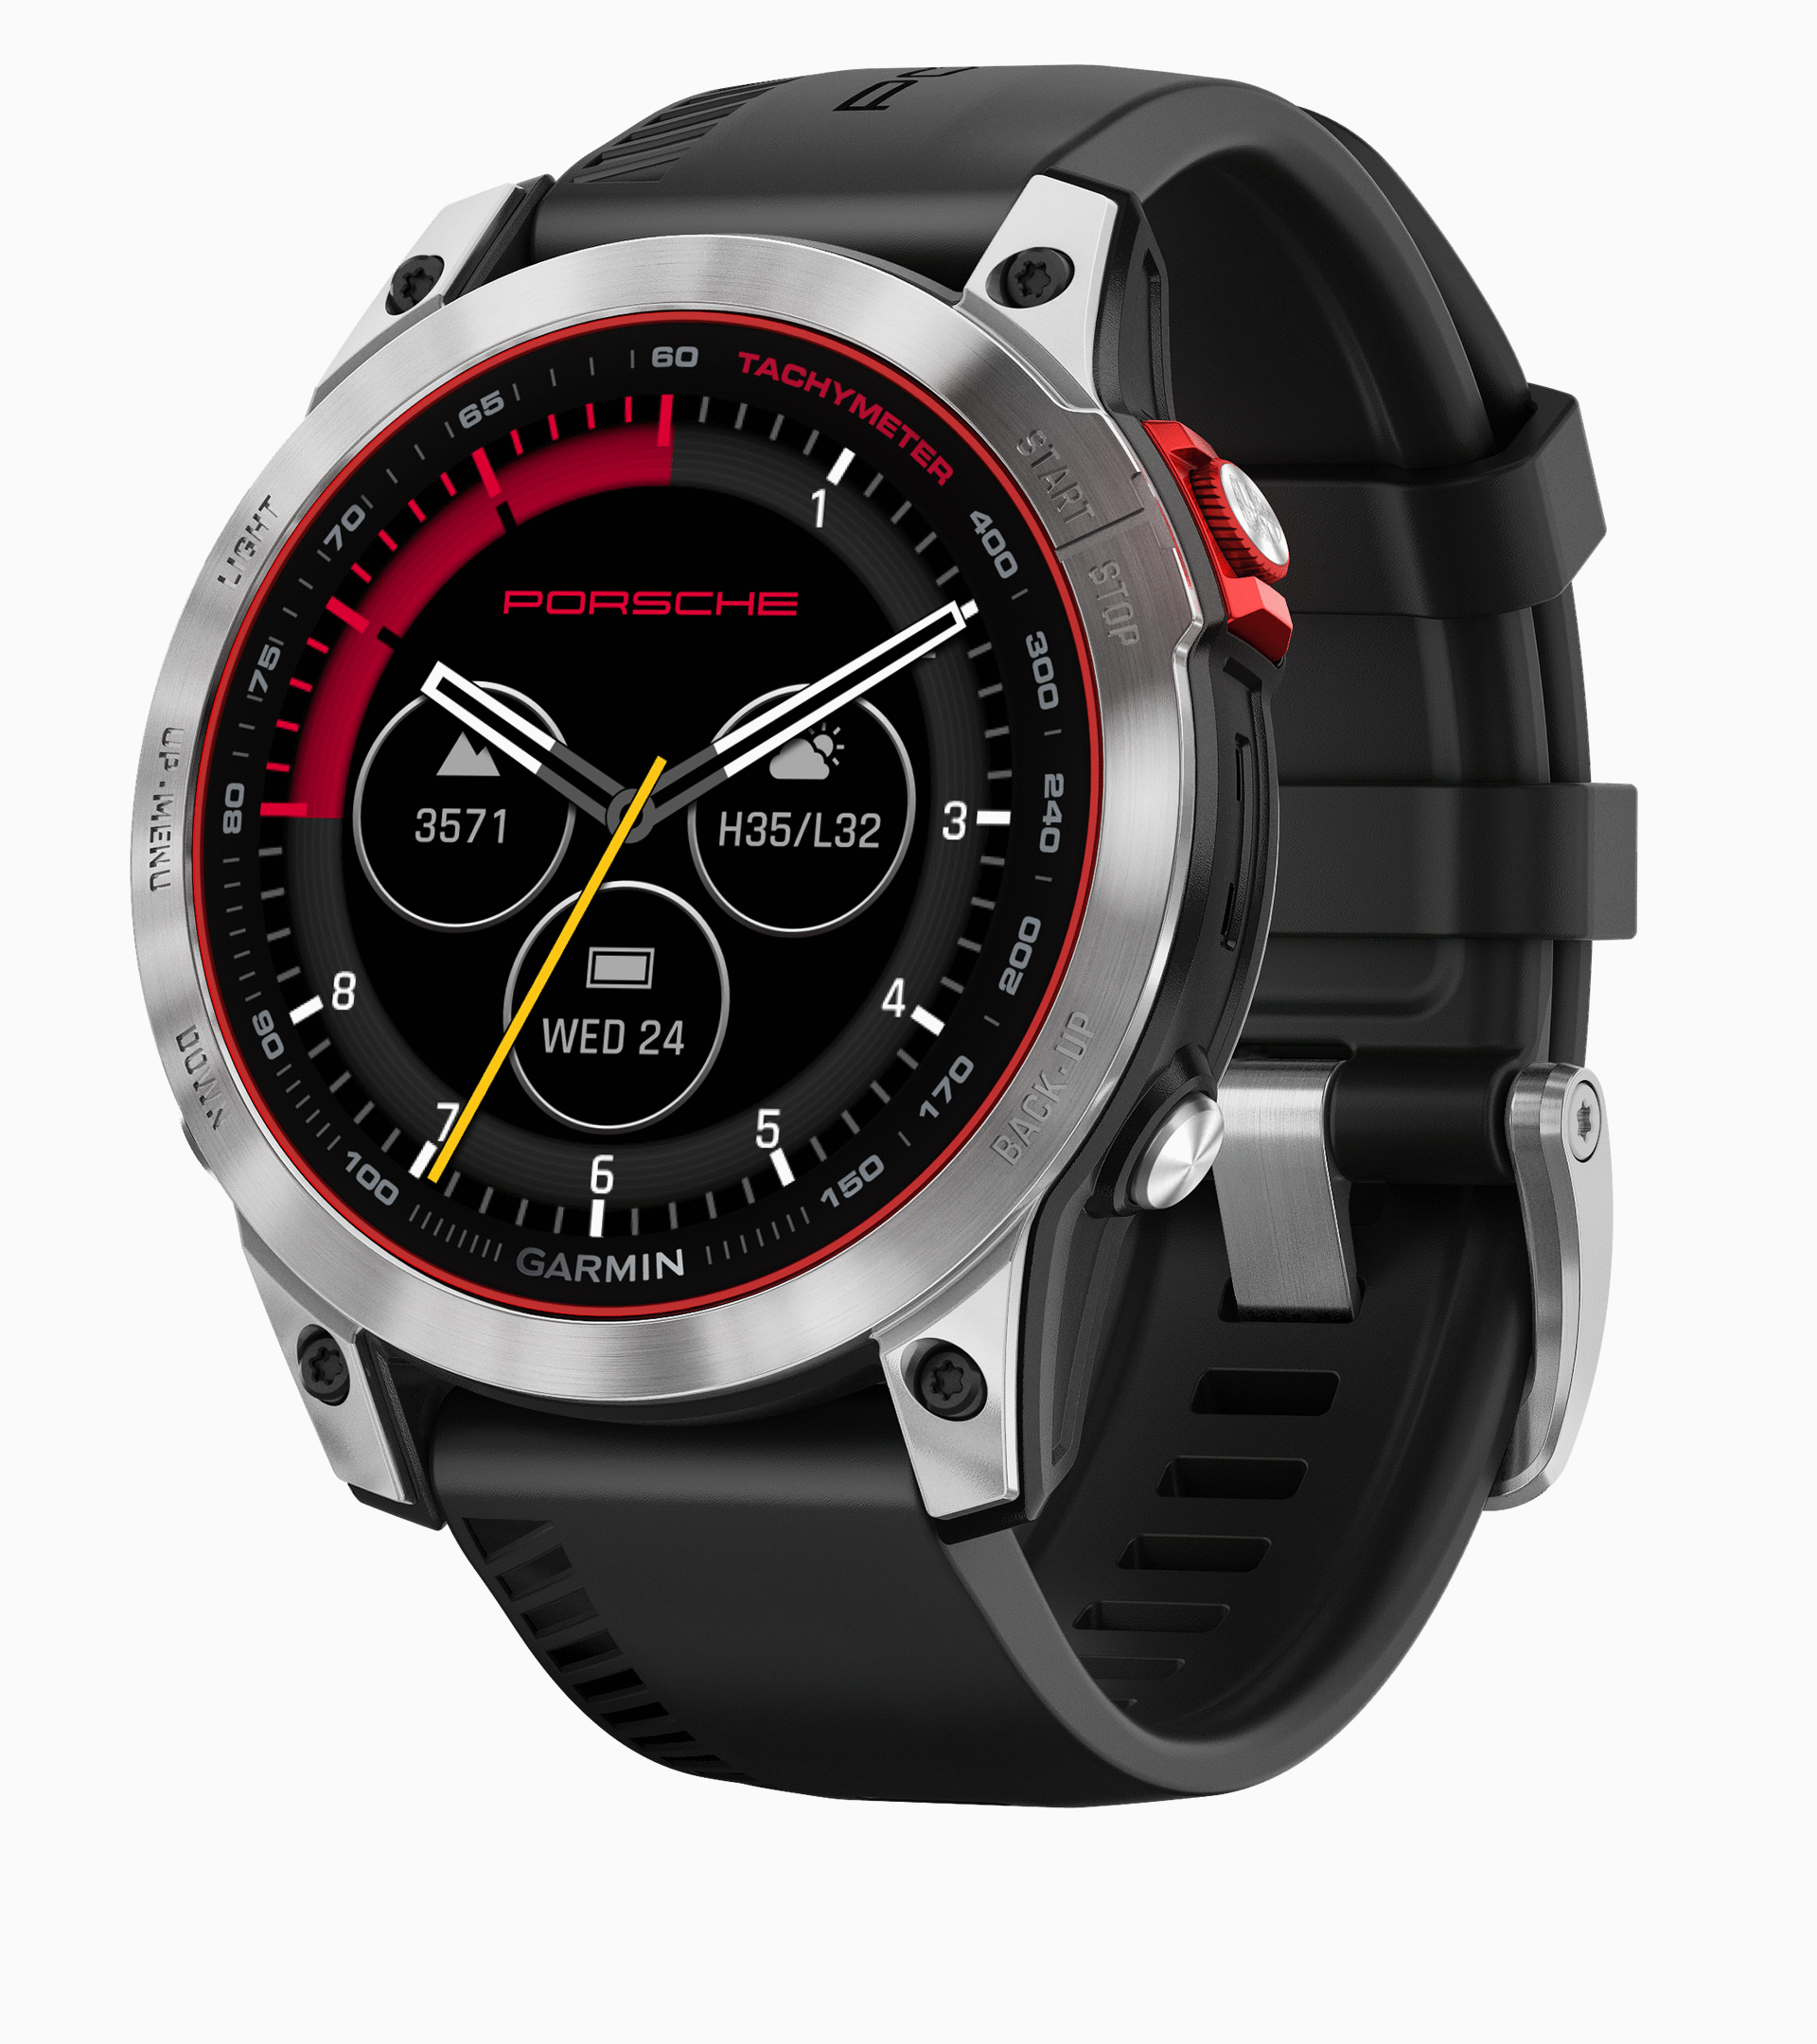 Porsche Garmin Epix Smart Watch